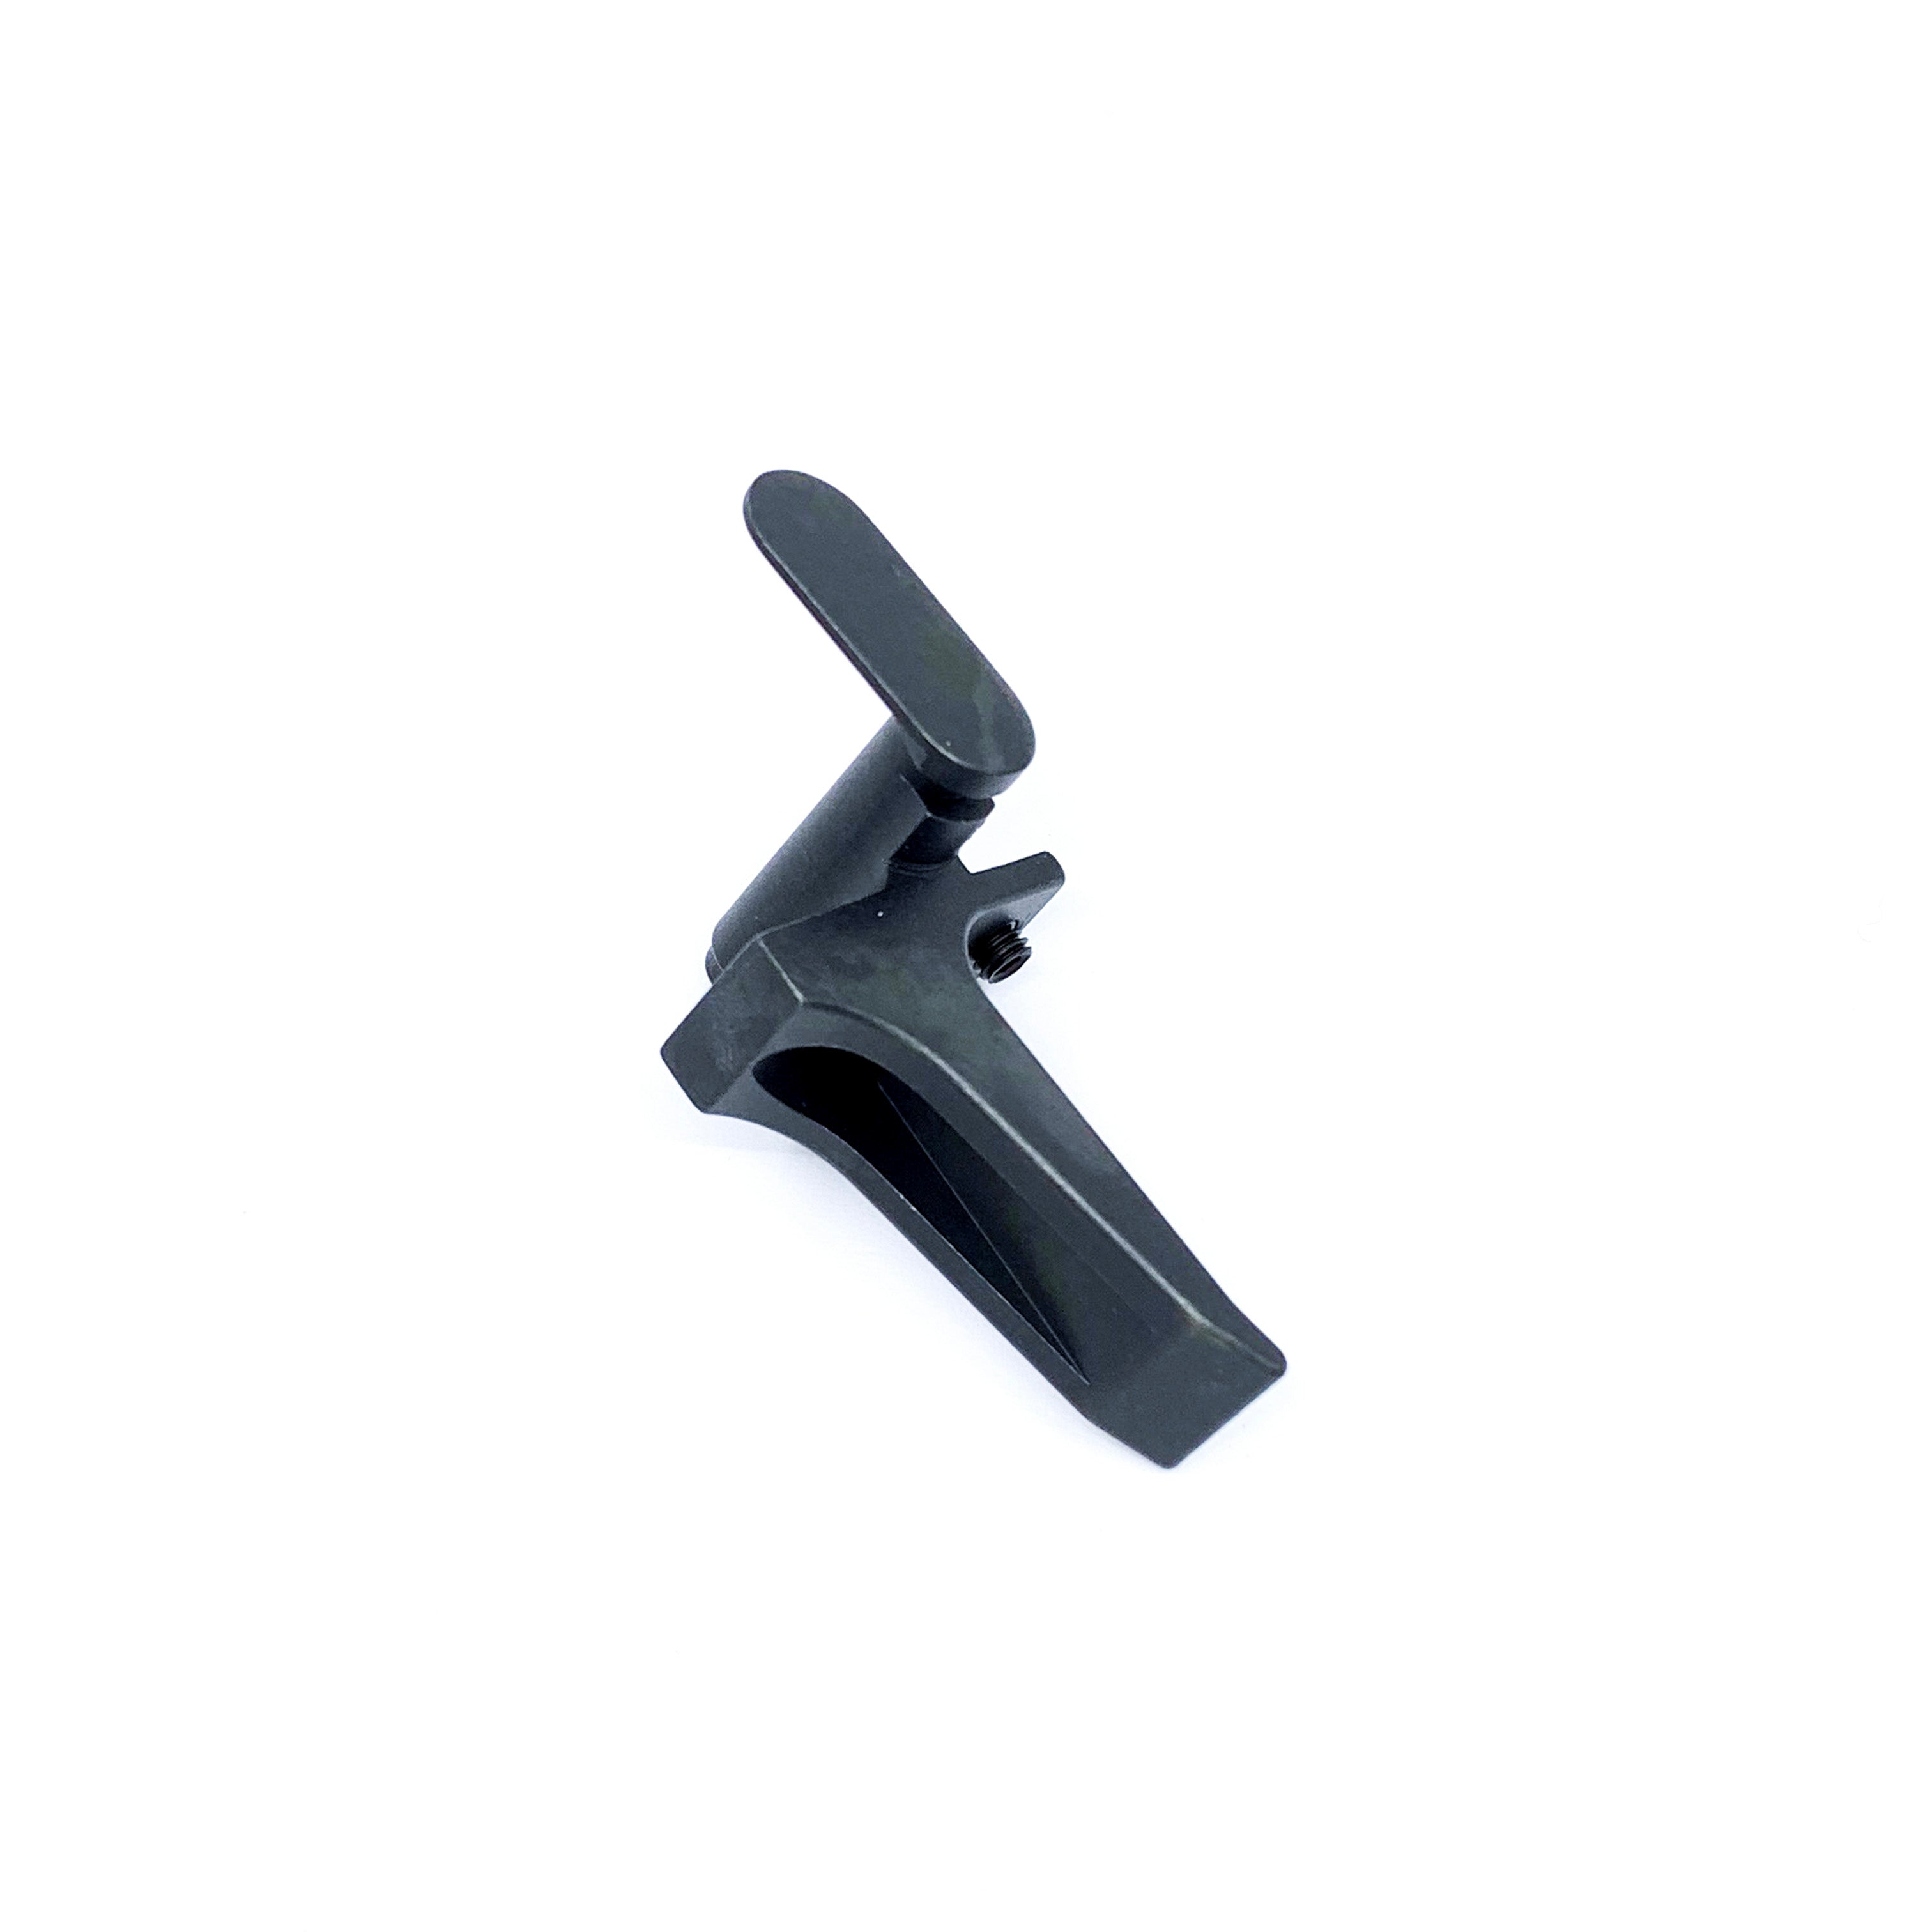 Pro Arms Steel CNC XFIVE Trigger (Black) - VFC SIG M17 / M18